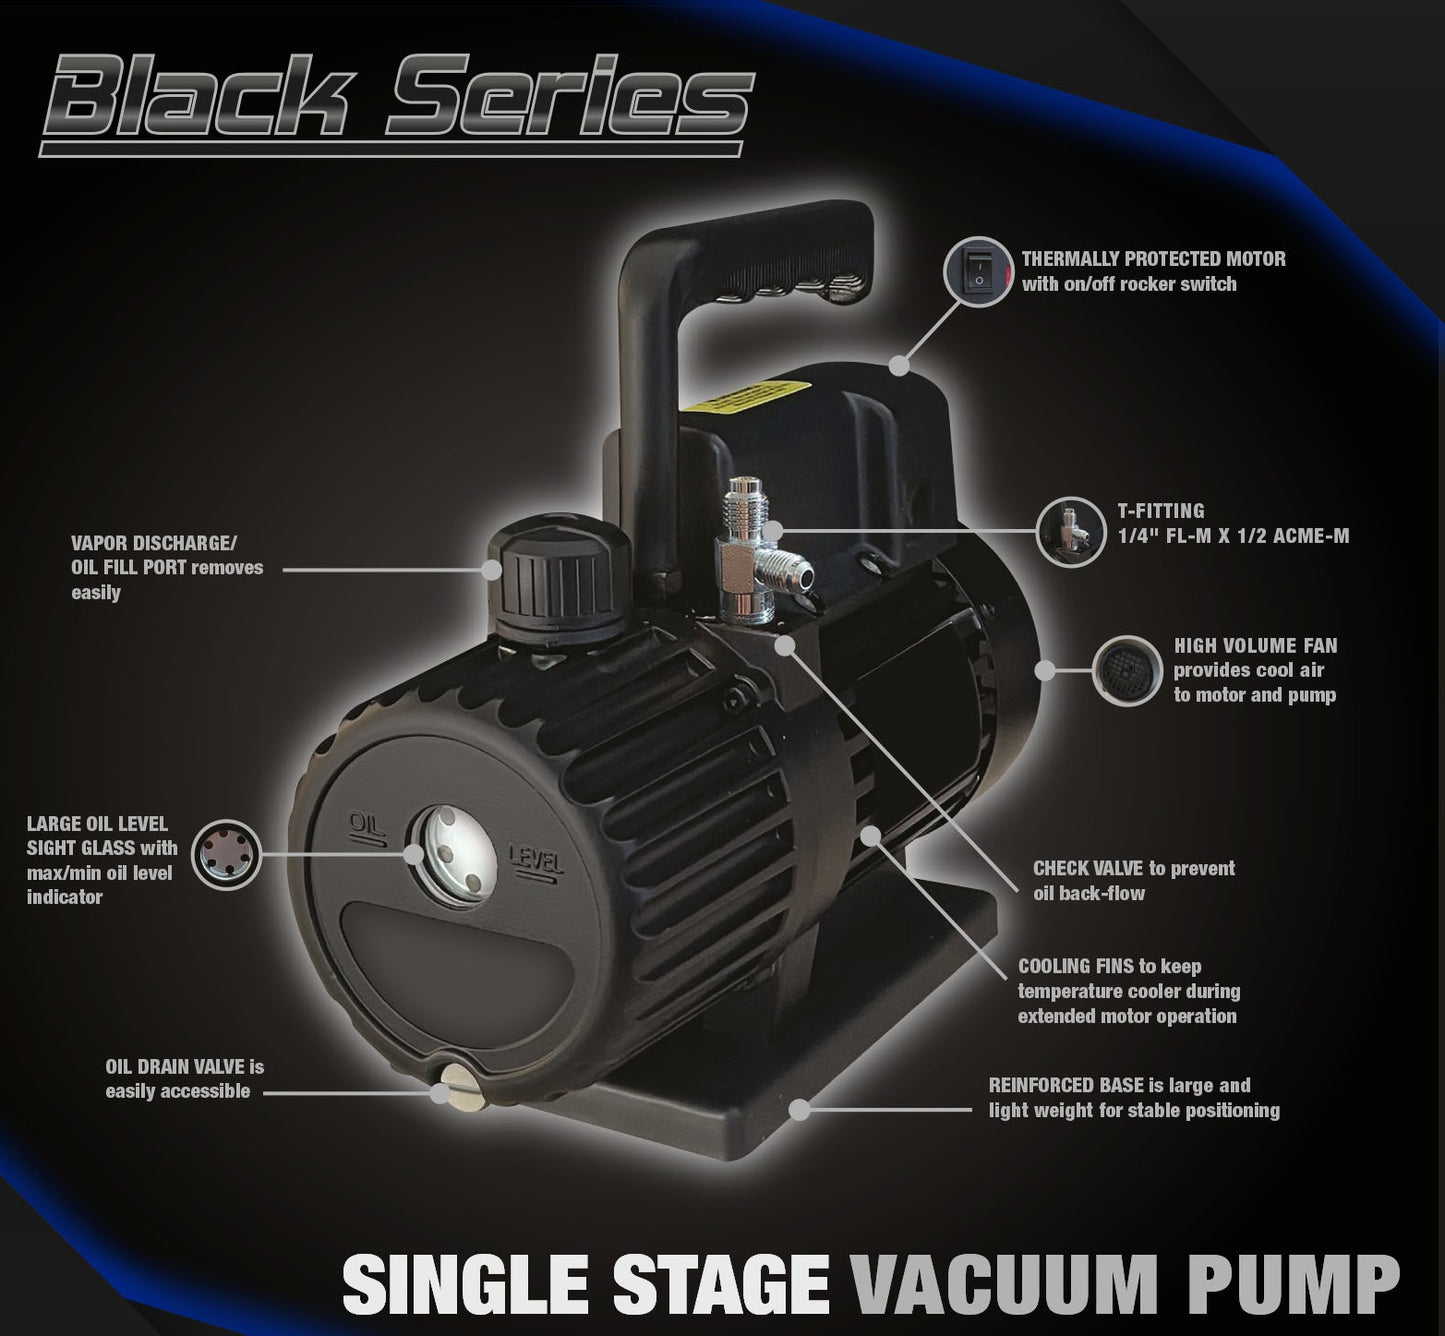 6" ID Clear PVC Vacuum Chamber + 3 CFM Mastercool Vacuum Pump